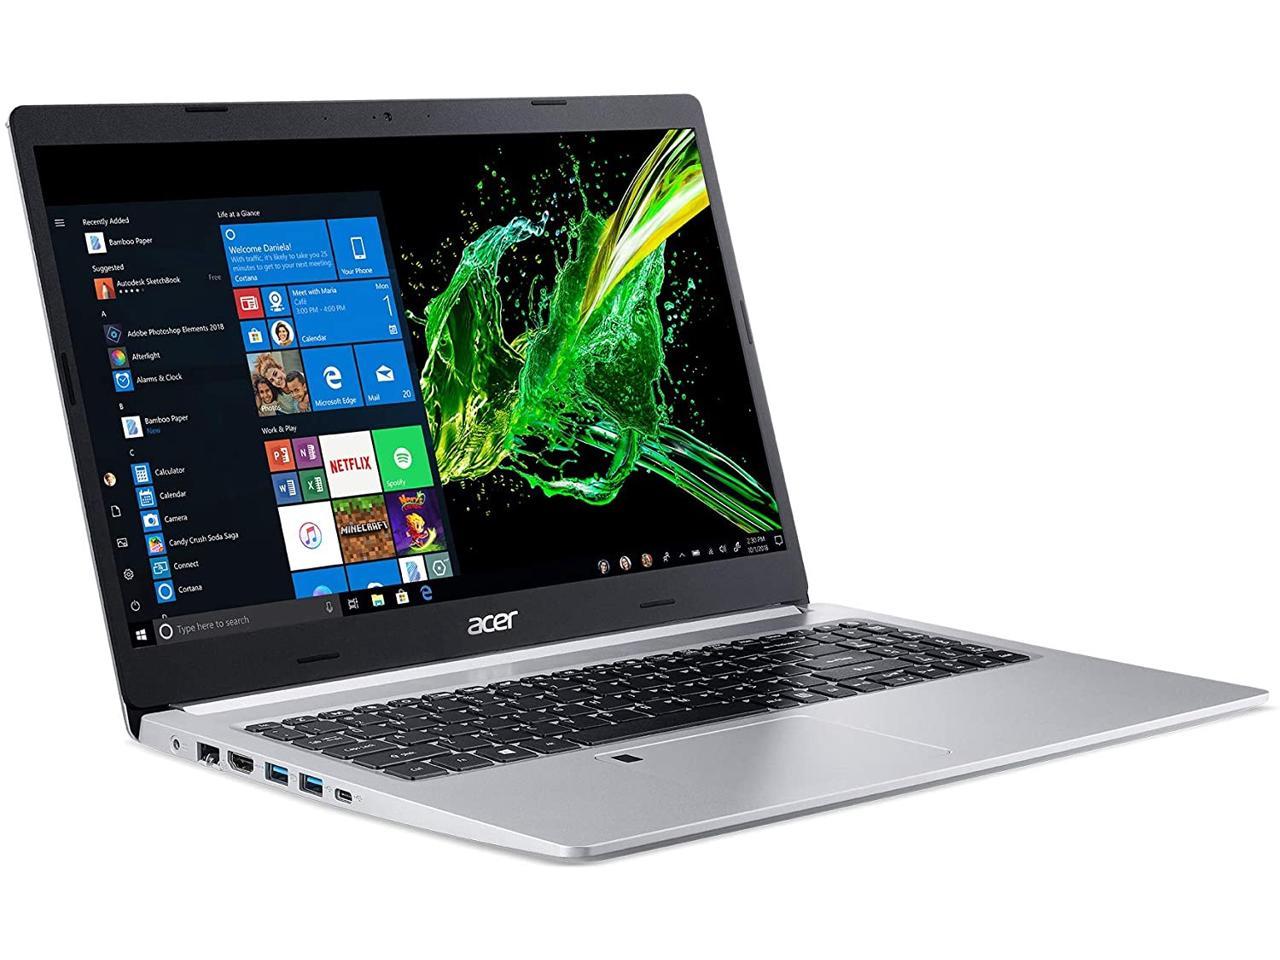 Acer Aspire 5 - 15.6" AMD Ryzen 3200U 2.6GHz 4GB Ram 128GB SSD Windows 10 Home